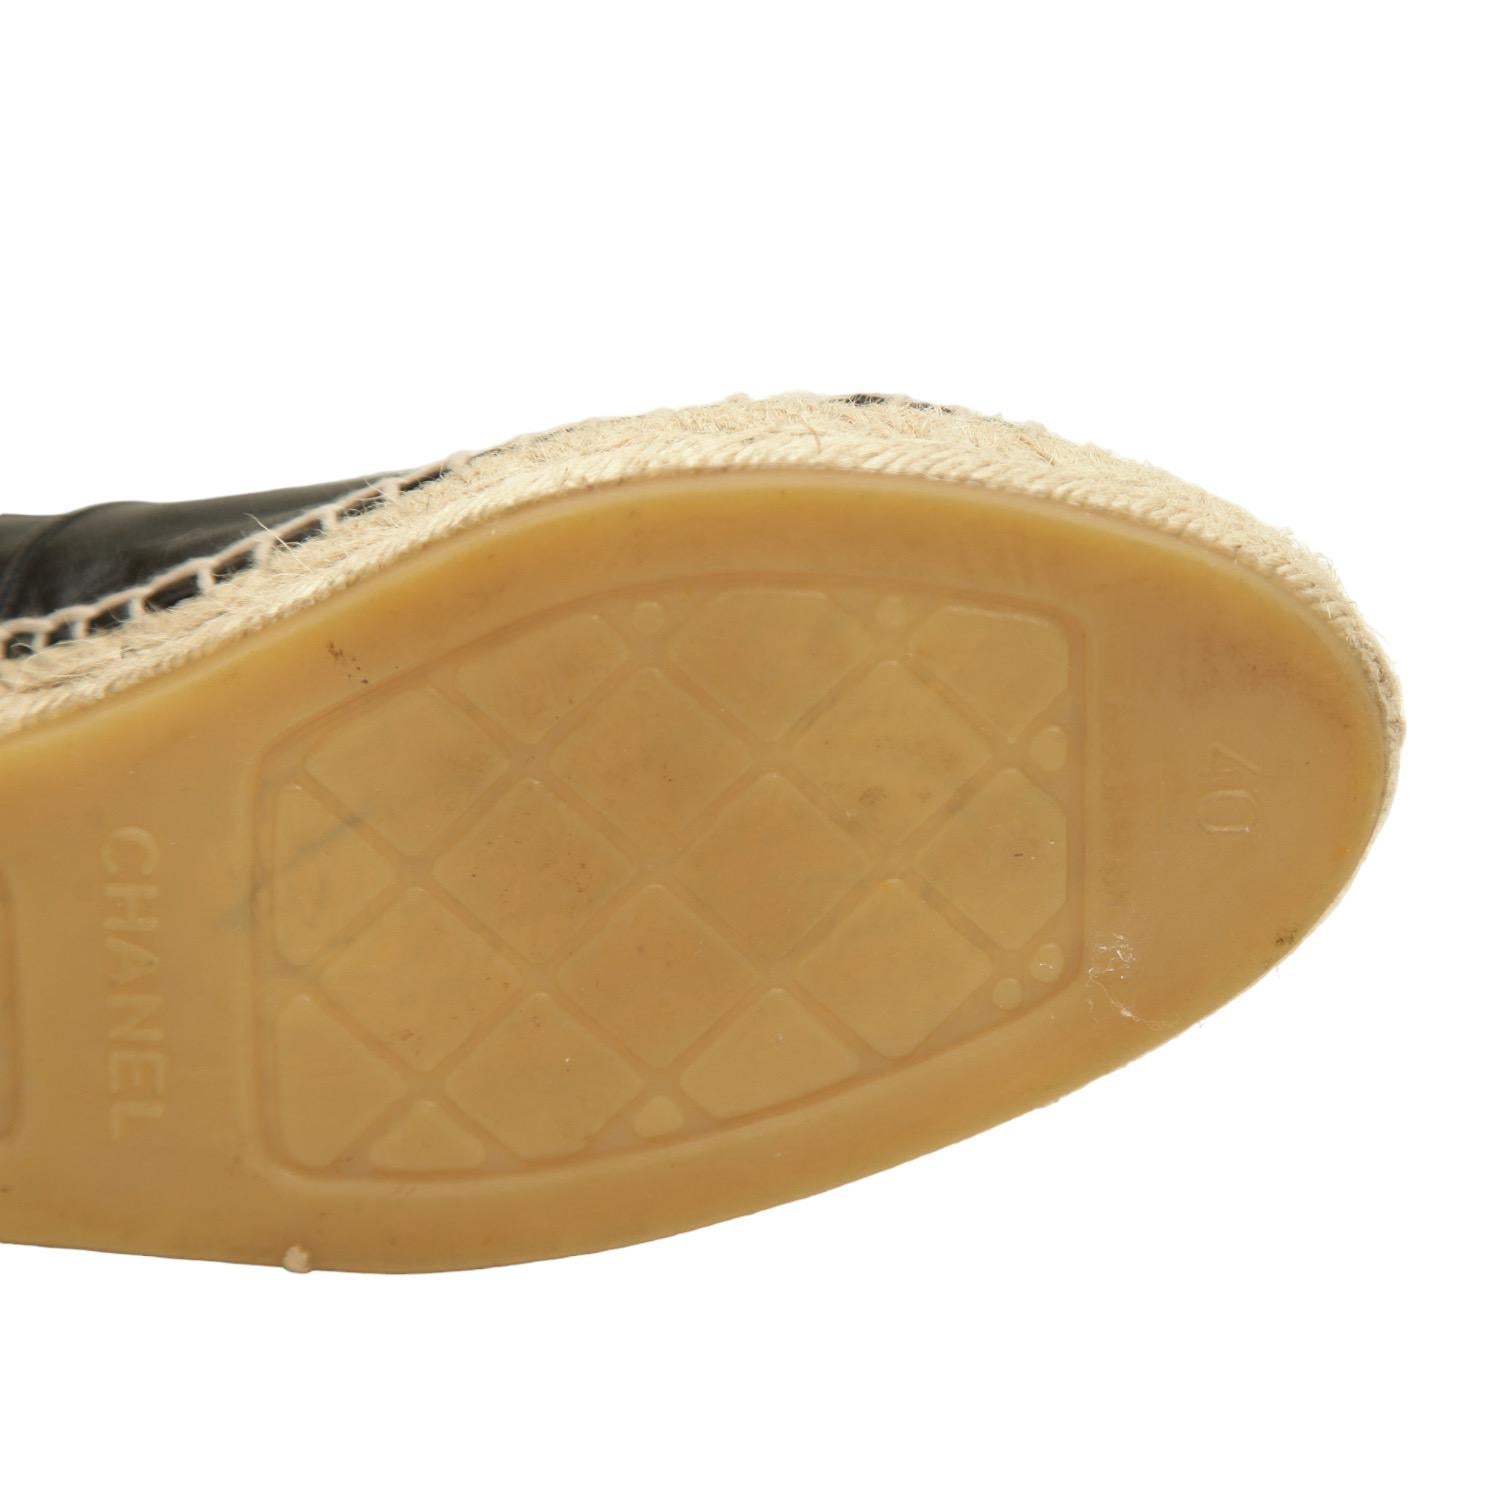 CHANEL Black Lambskin Leather Espadrilles Loafers Flats Cap Toe CC Shoes Sz 40 8